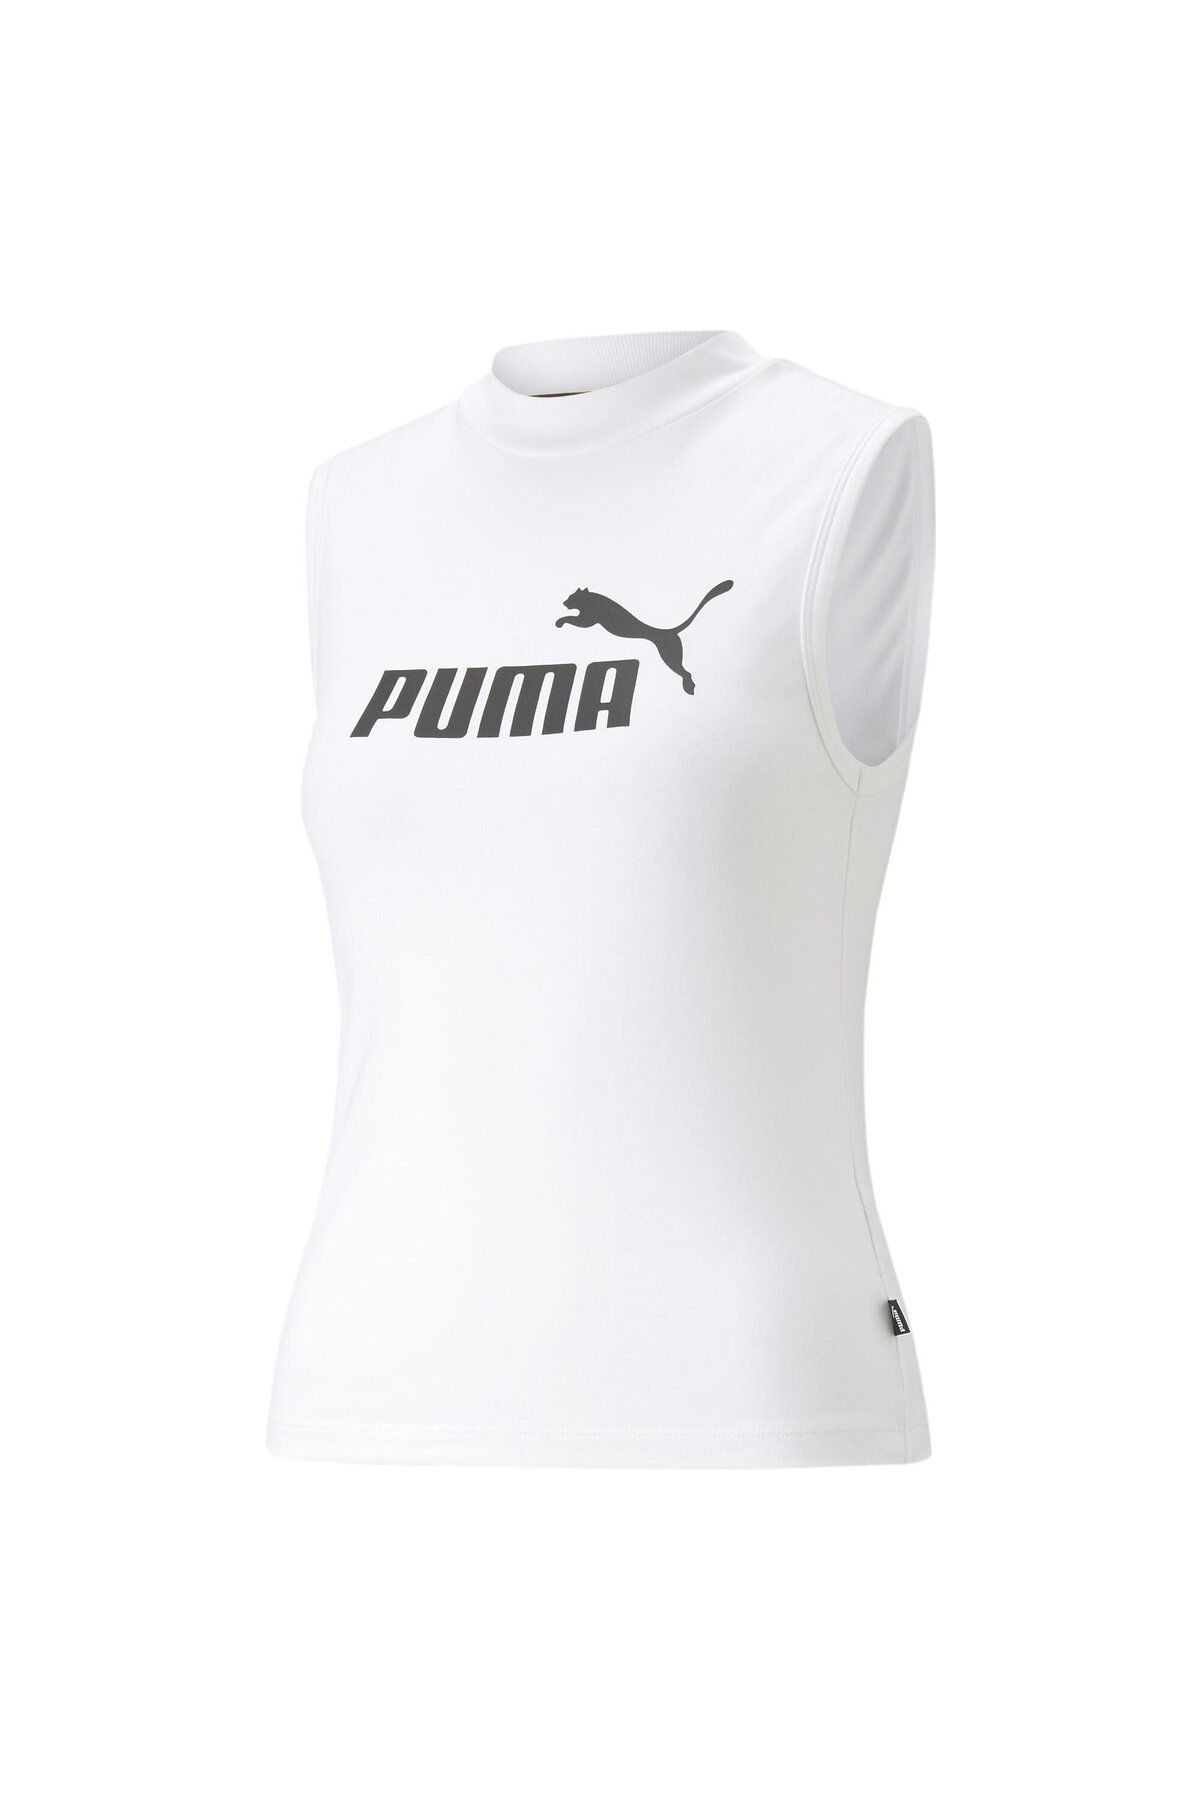 Puma Ess Slim Logo Tank Kadın Atlet